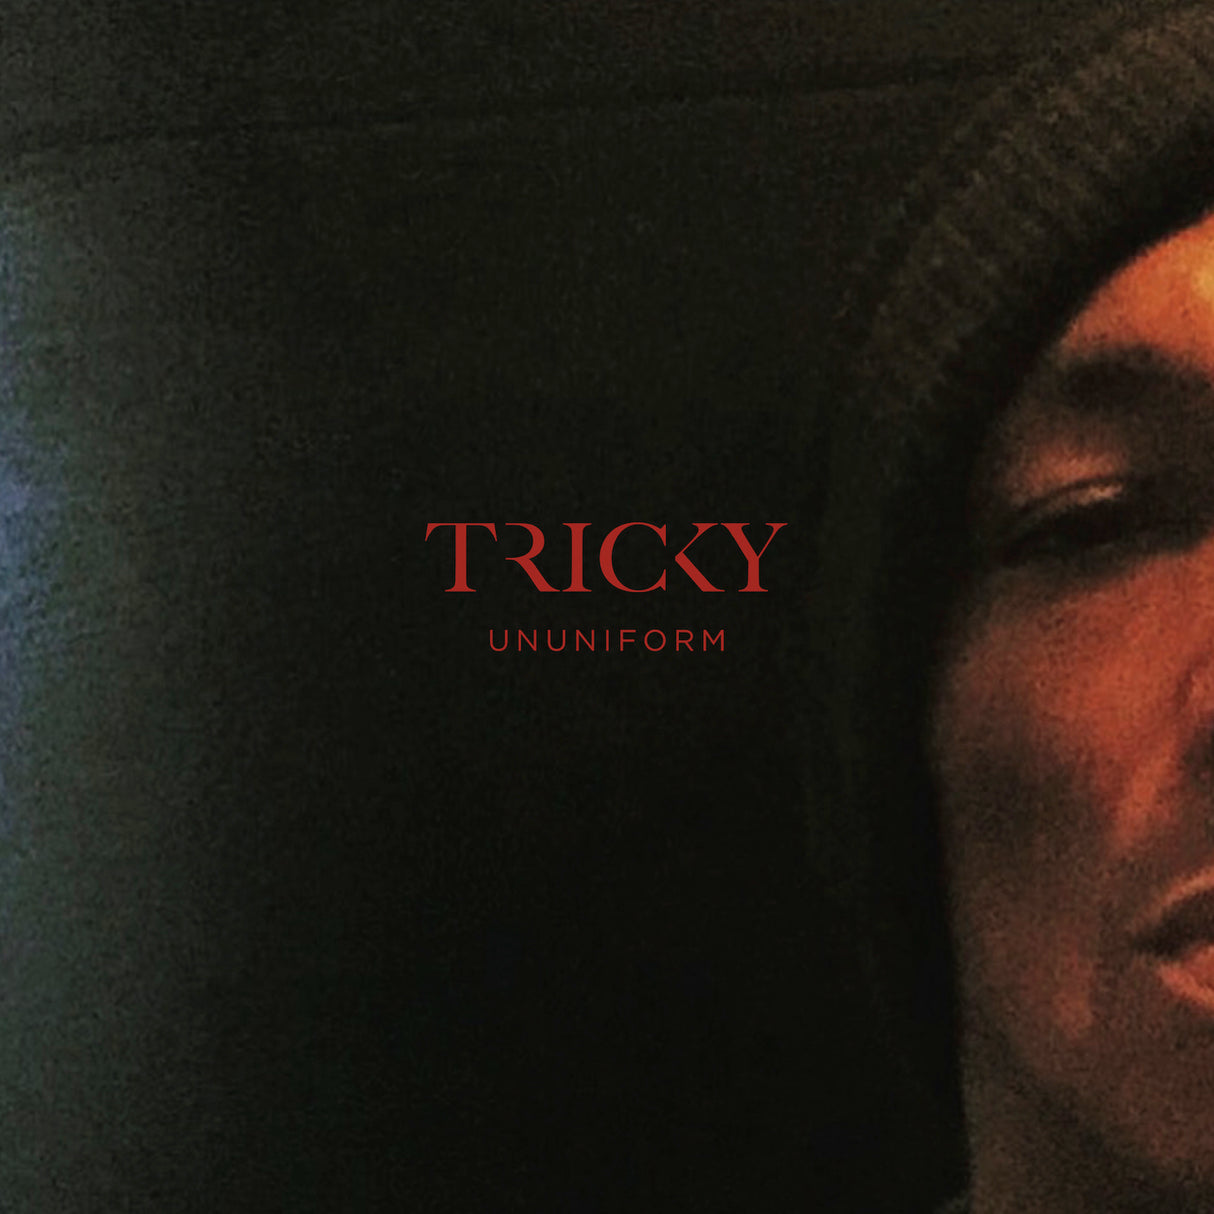 Tricky - ununiform [CD]